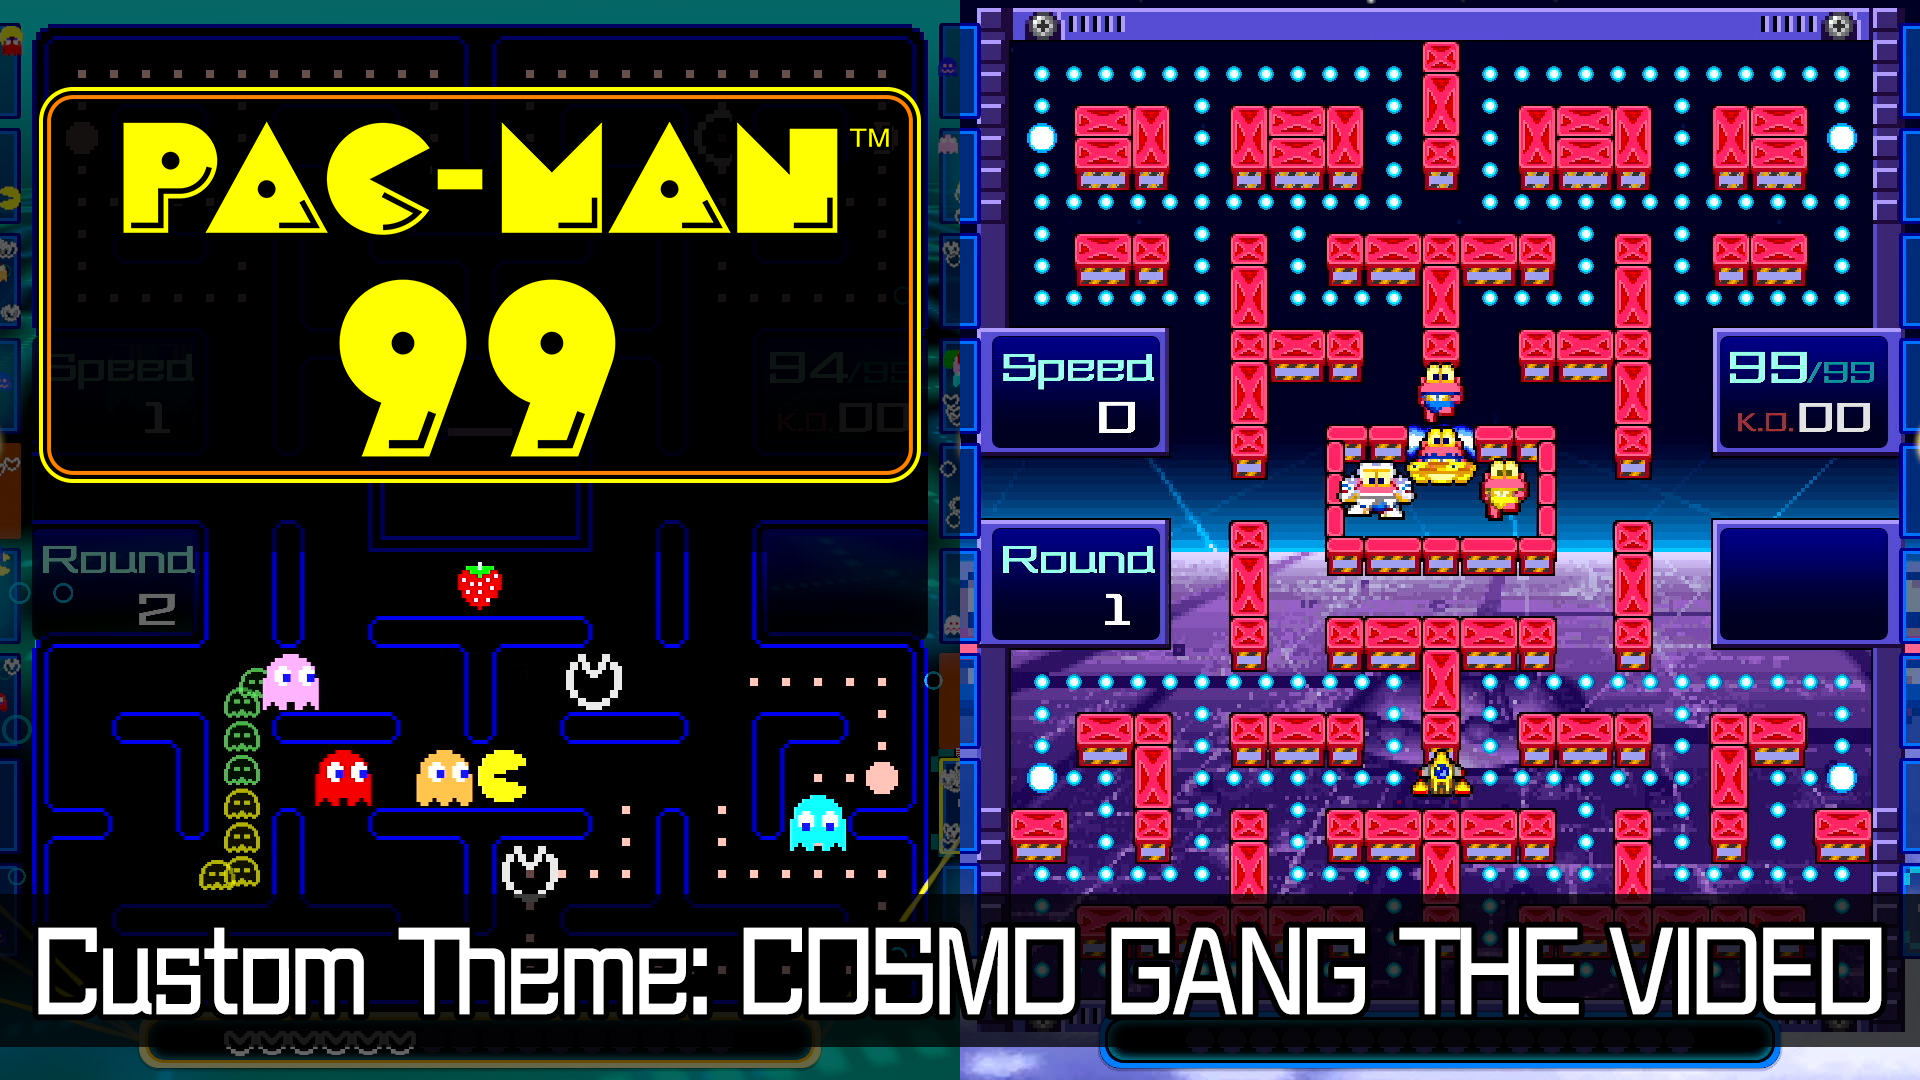 PAC-MAN 99 Custom Theme: COSMO GANG THE VIDEO